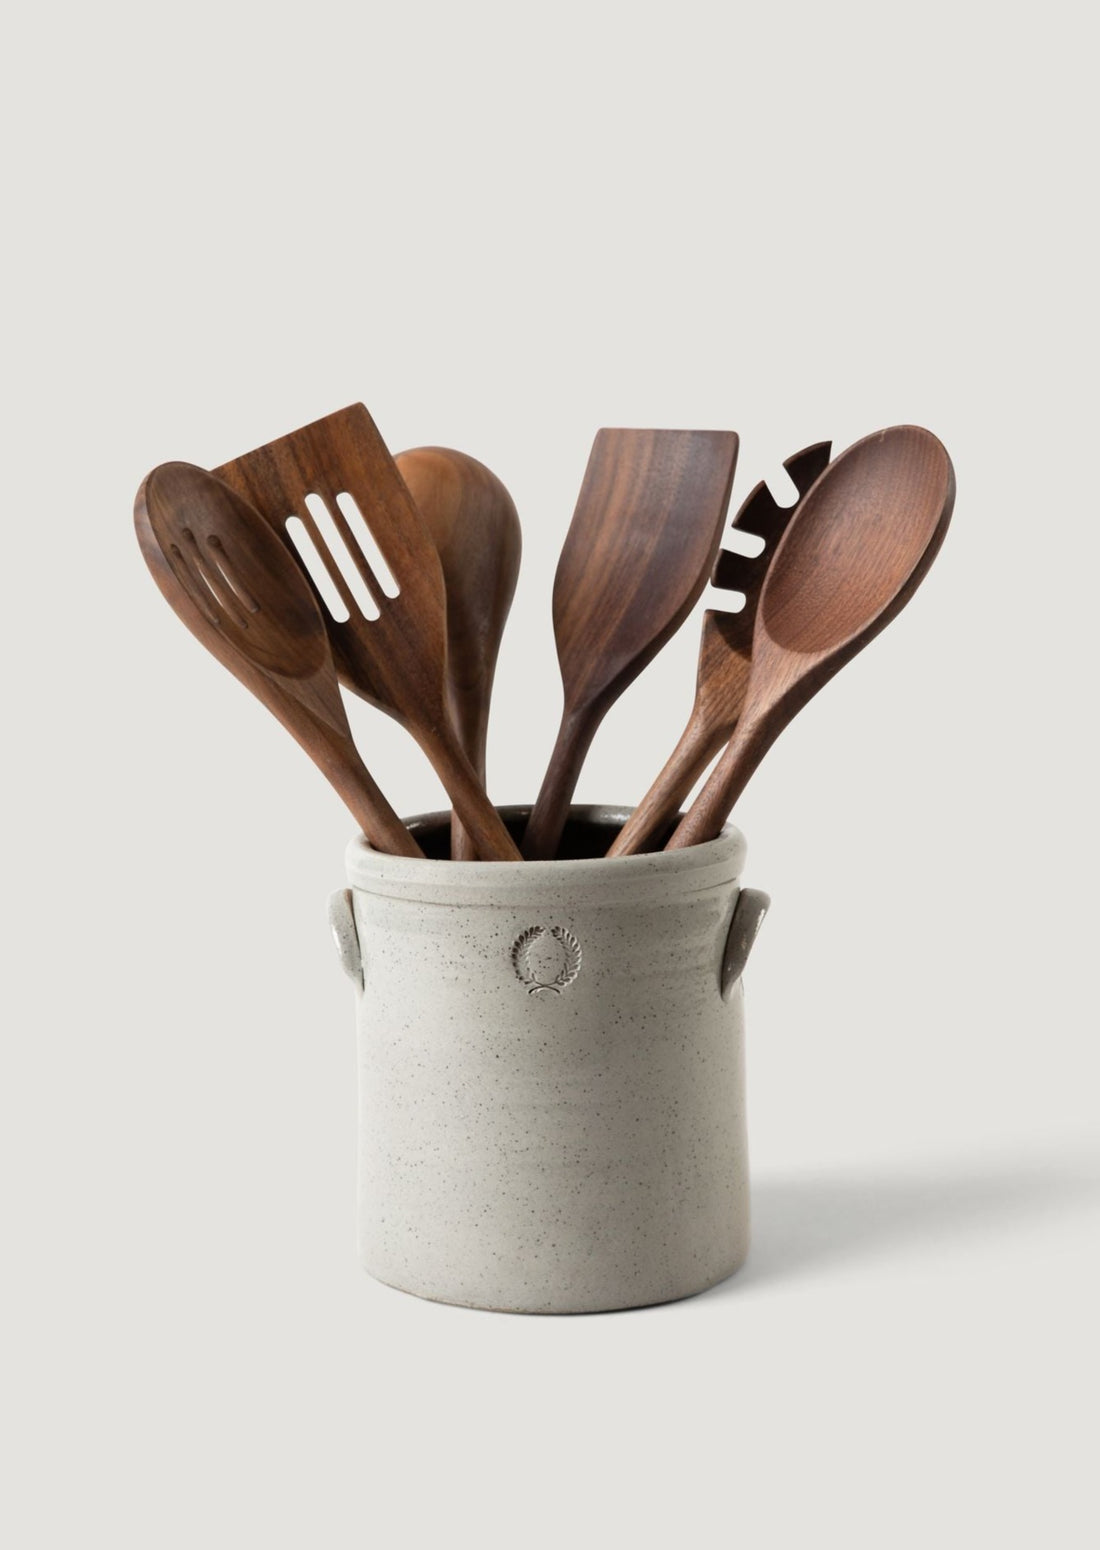 Farmhouse Pottery Walnut Wood Spoons Styled in Grey Glazed Half Gallon Crock